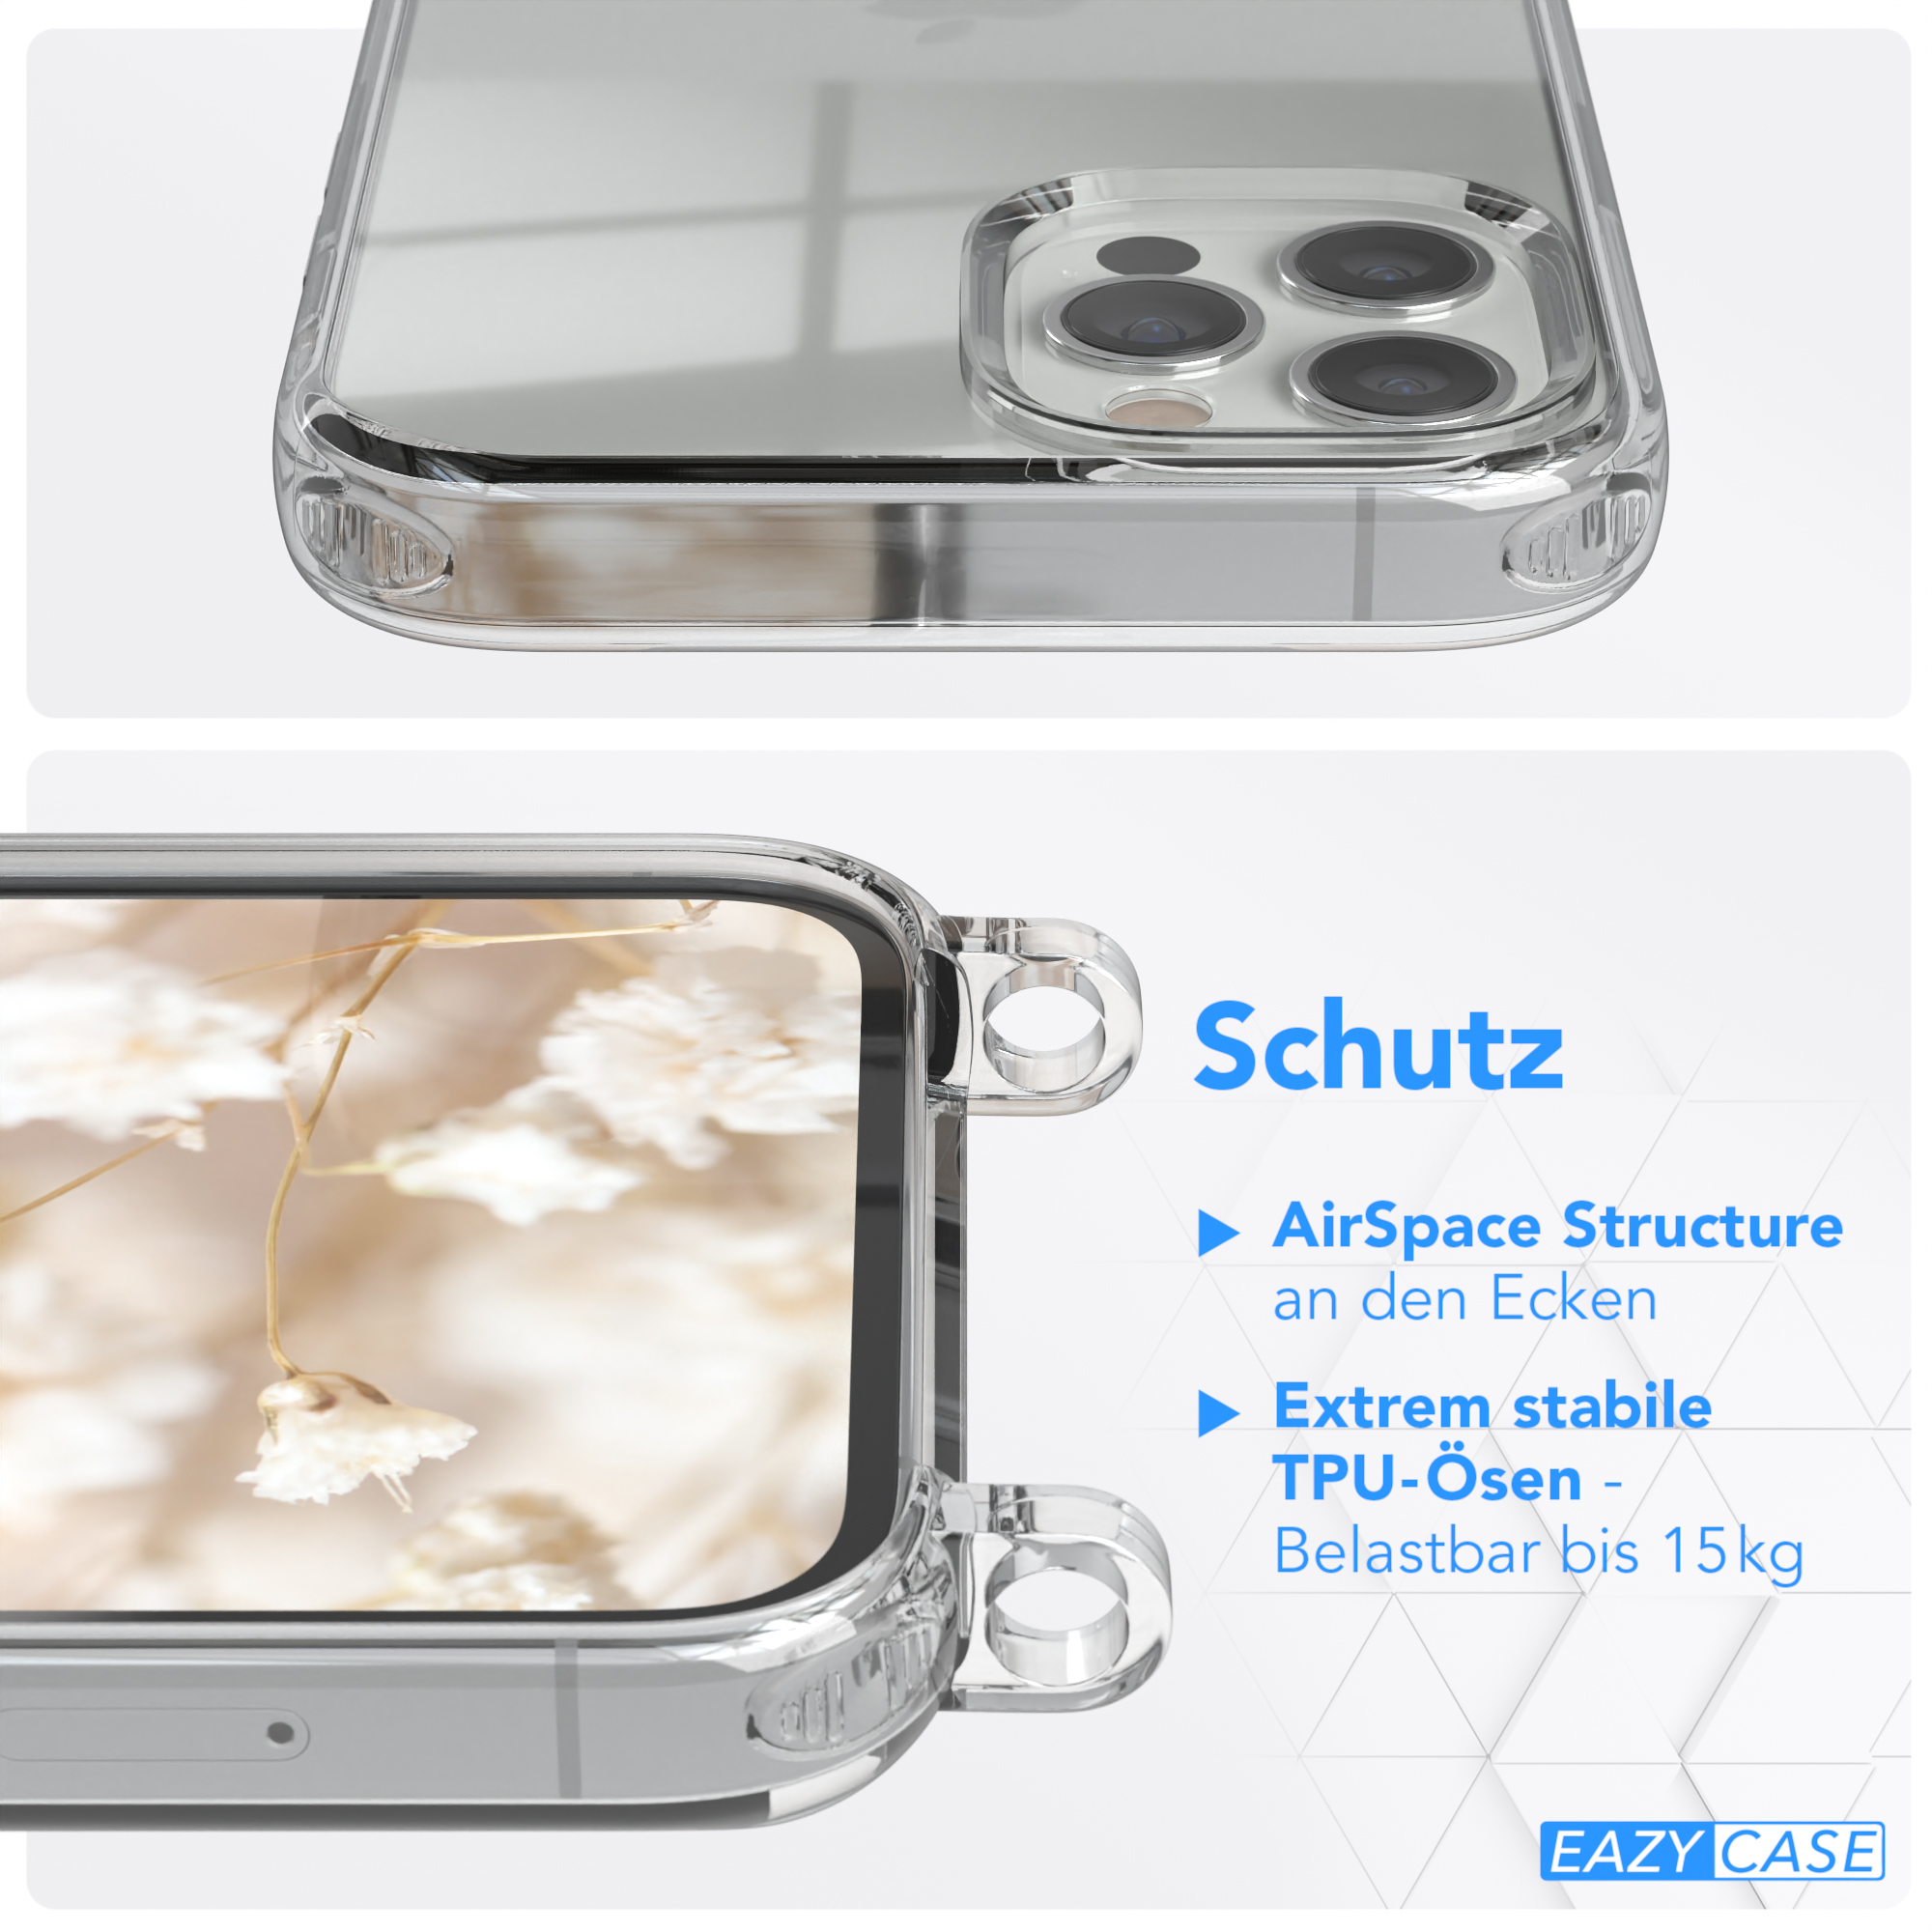 12 Apple, 12 Style, Braun CASE Kordel Rot Transparente / / EAZY Handyhülle Pro, Boho iPhone Umhängetasche, mit